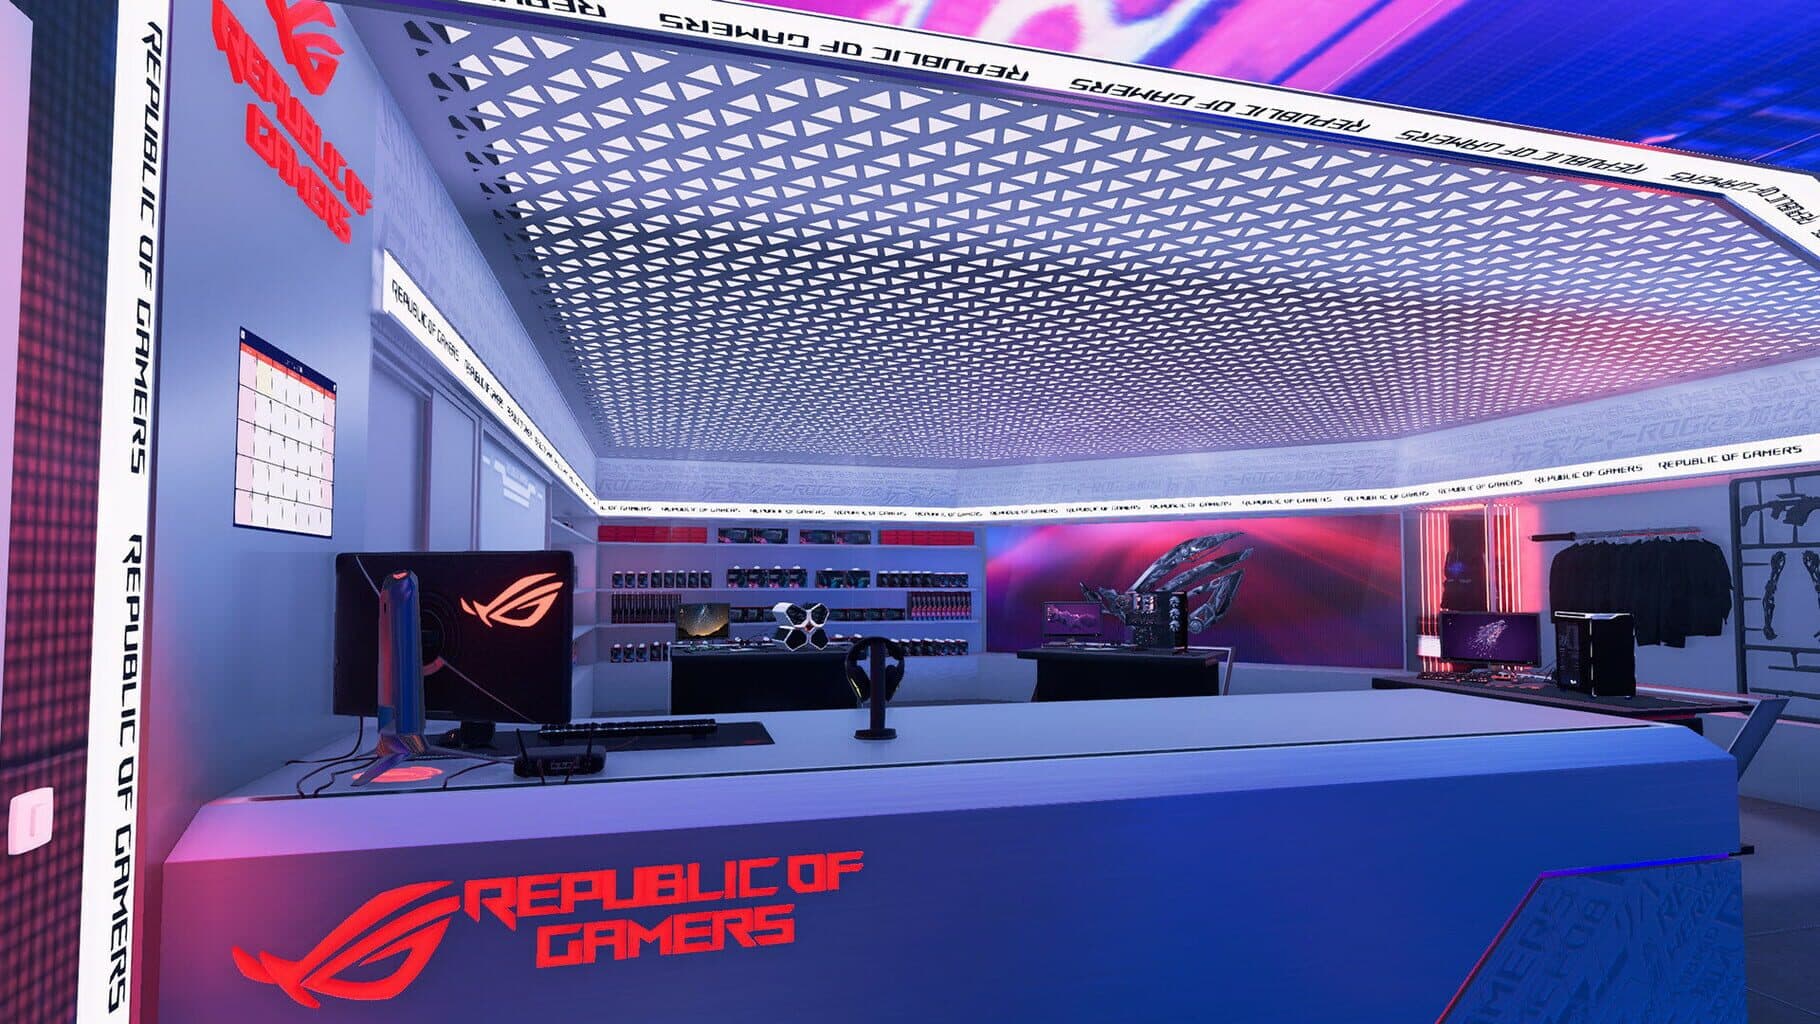 PC Building Simulator: Republic of Gamers Workshop Image